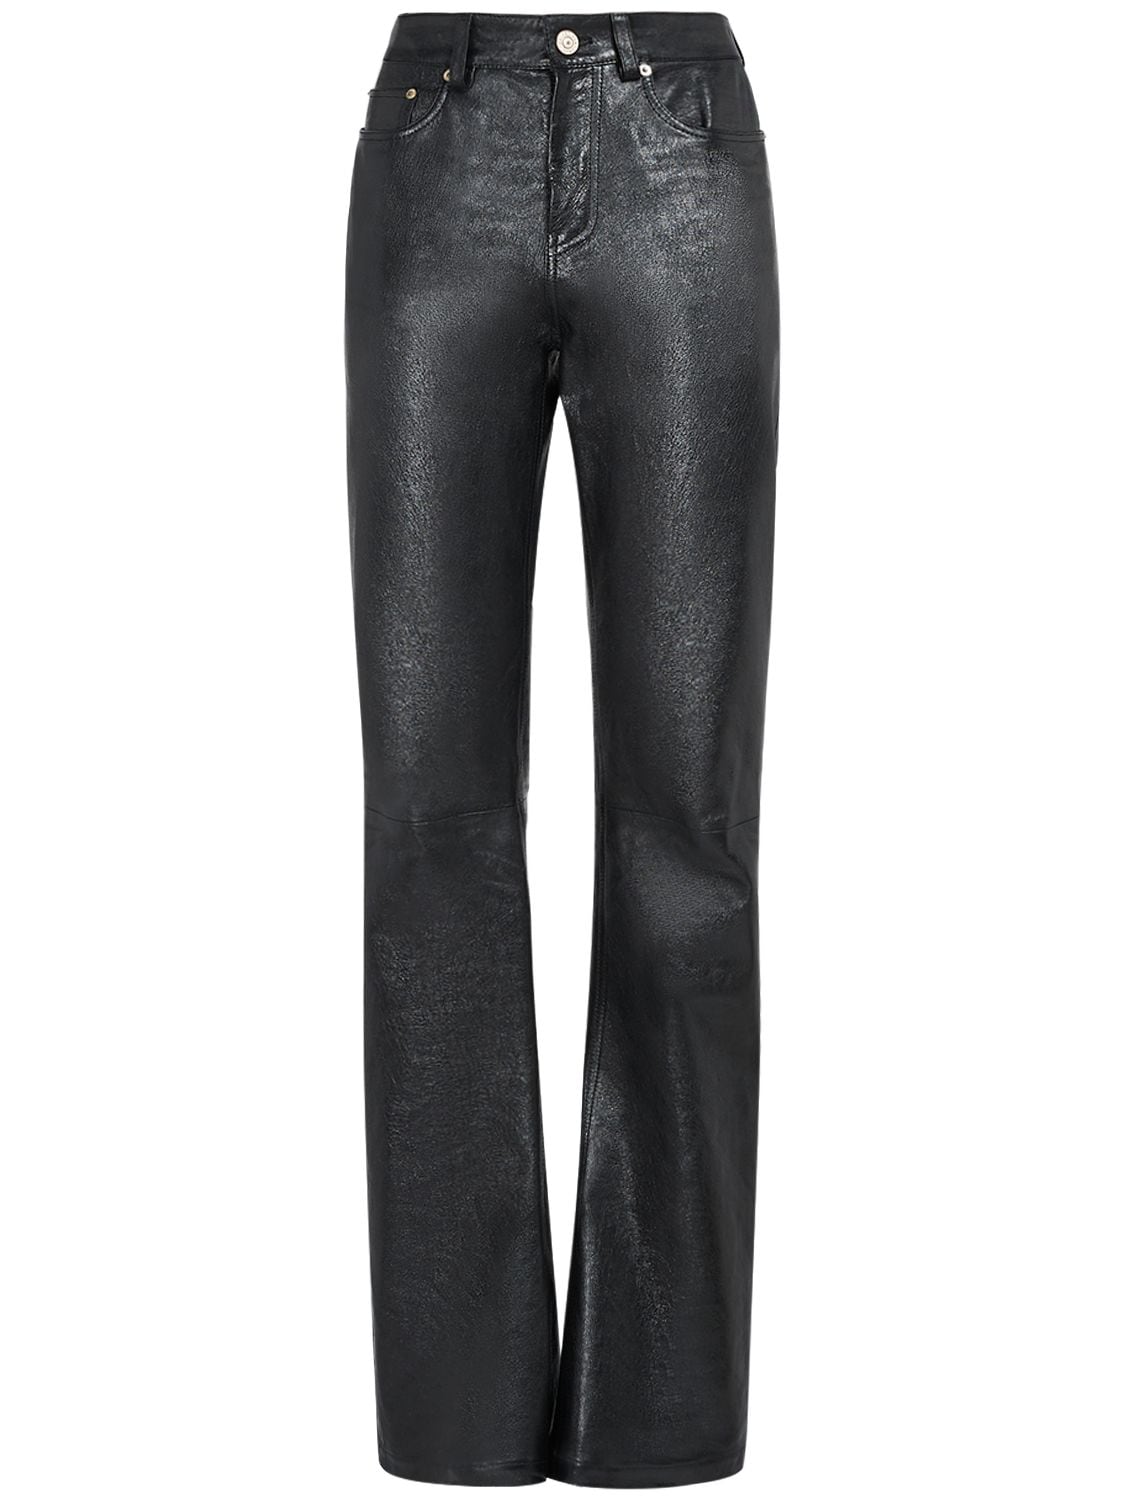 Image of Semi Shiny Leather Bootcut Pants